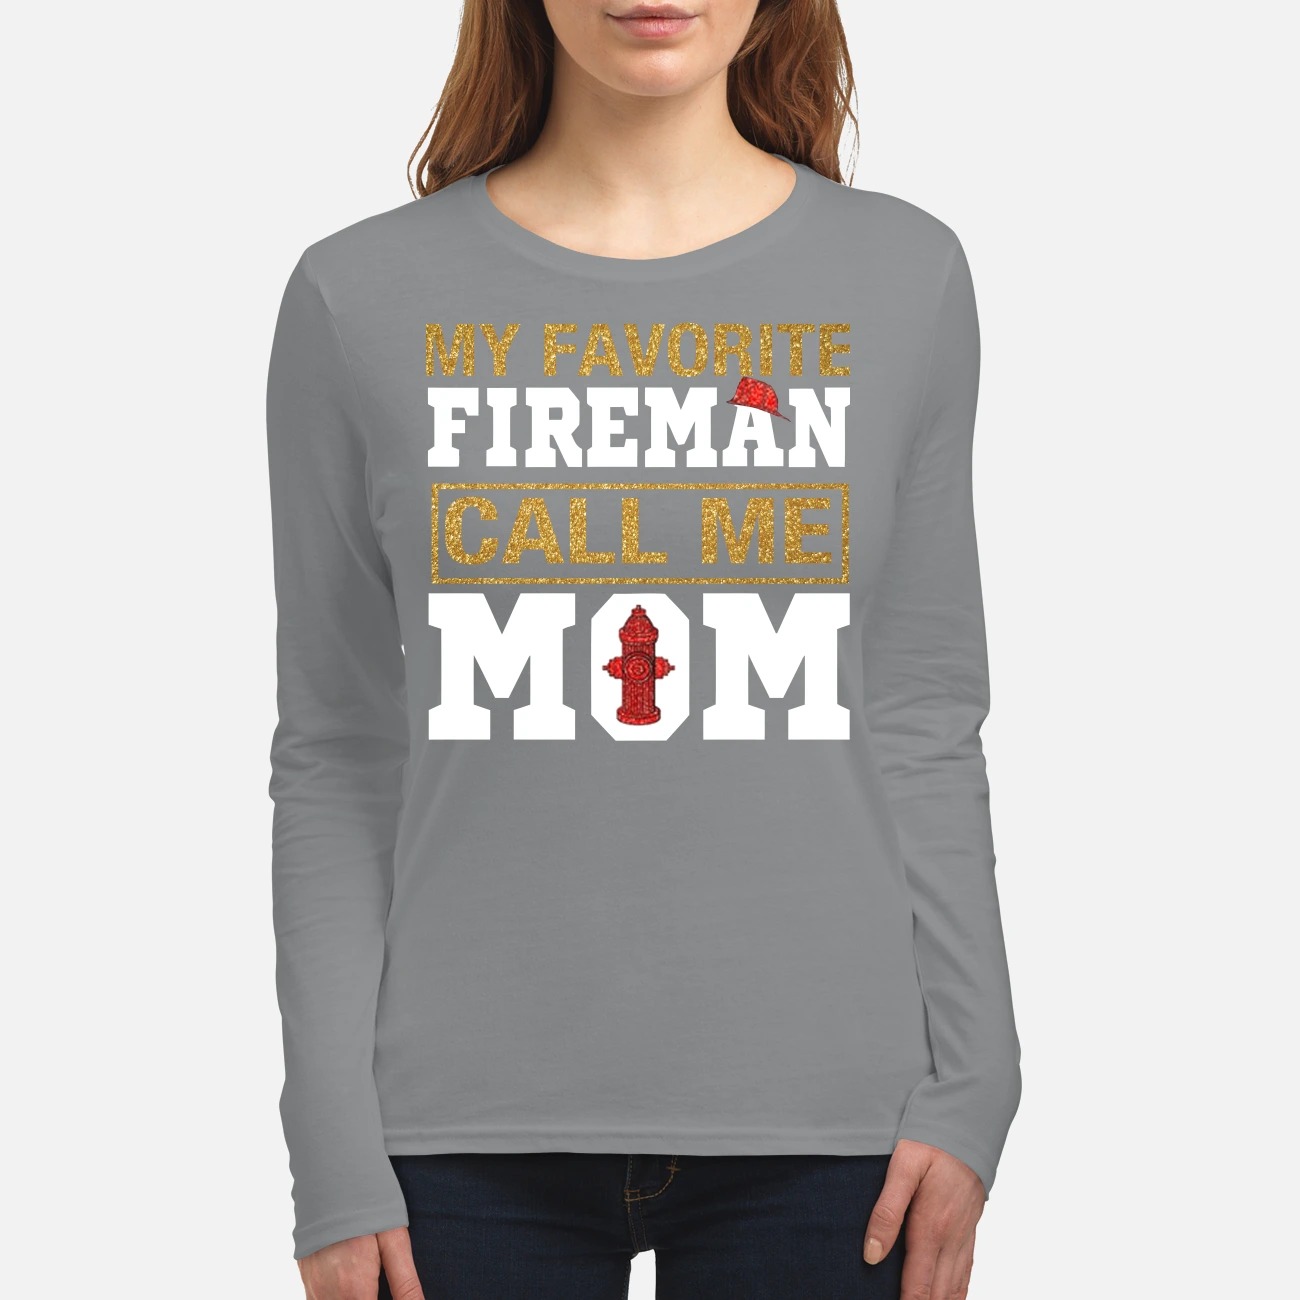 My favorite fireman call me mom women's long sleeved shirt